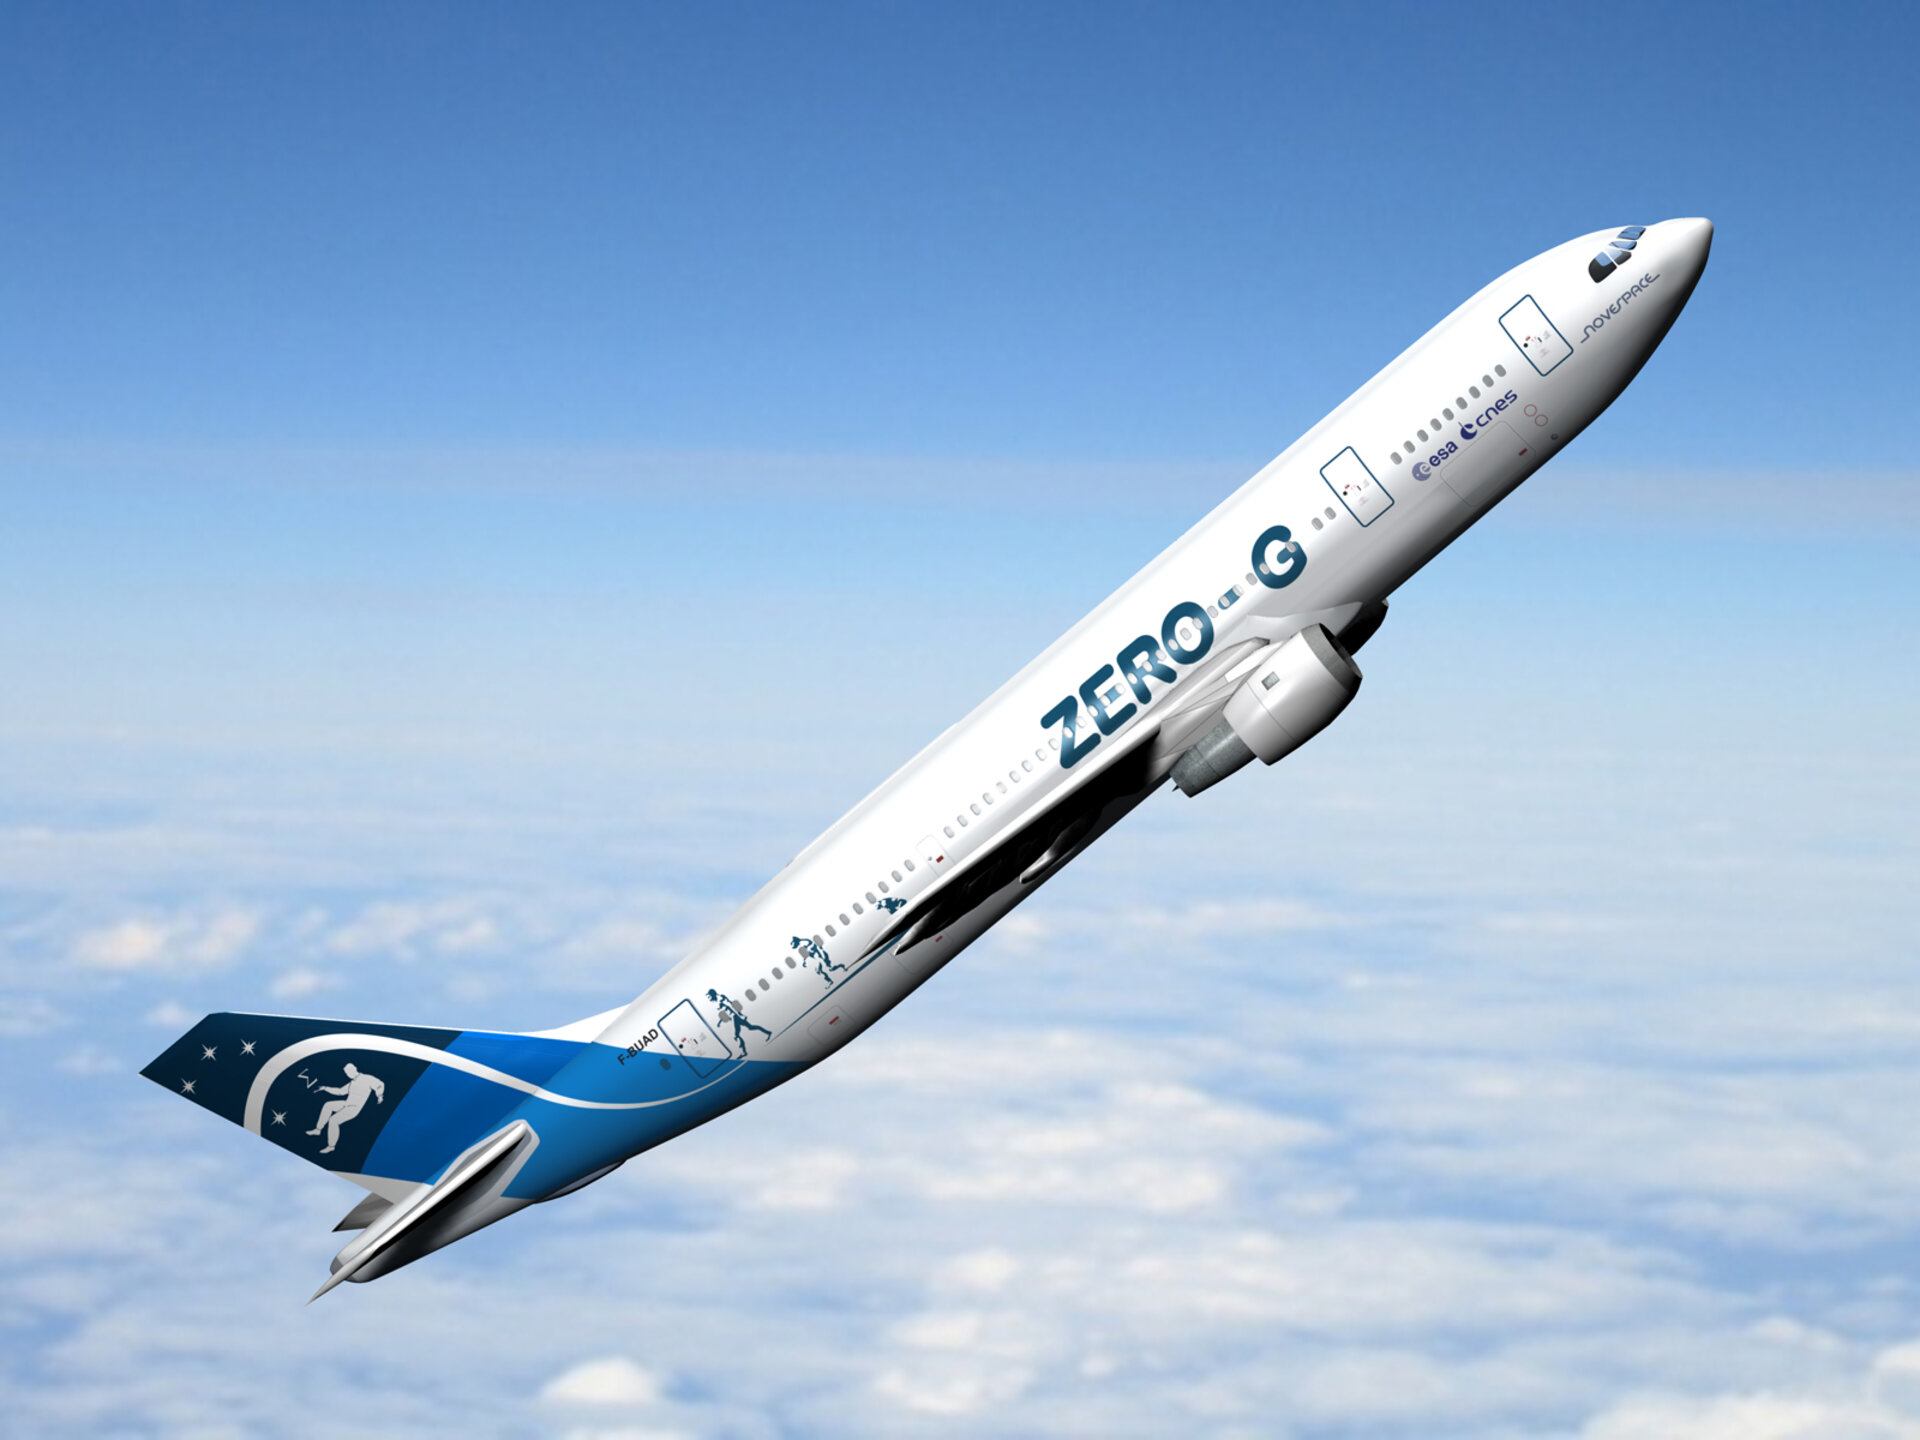 Zero-G Airbus A300 for parabolic flights